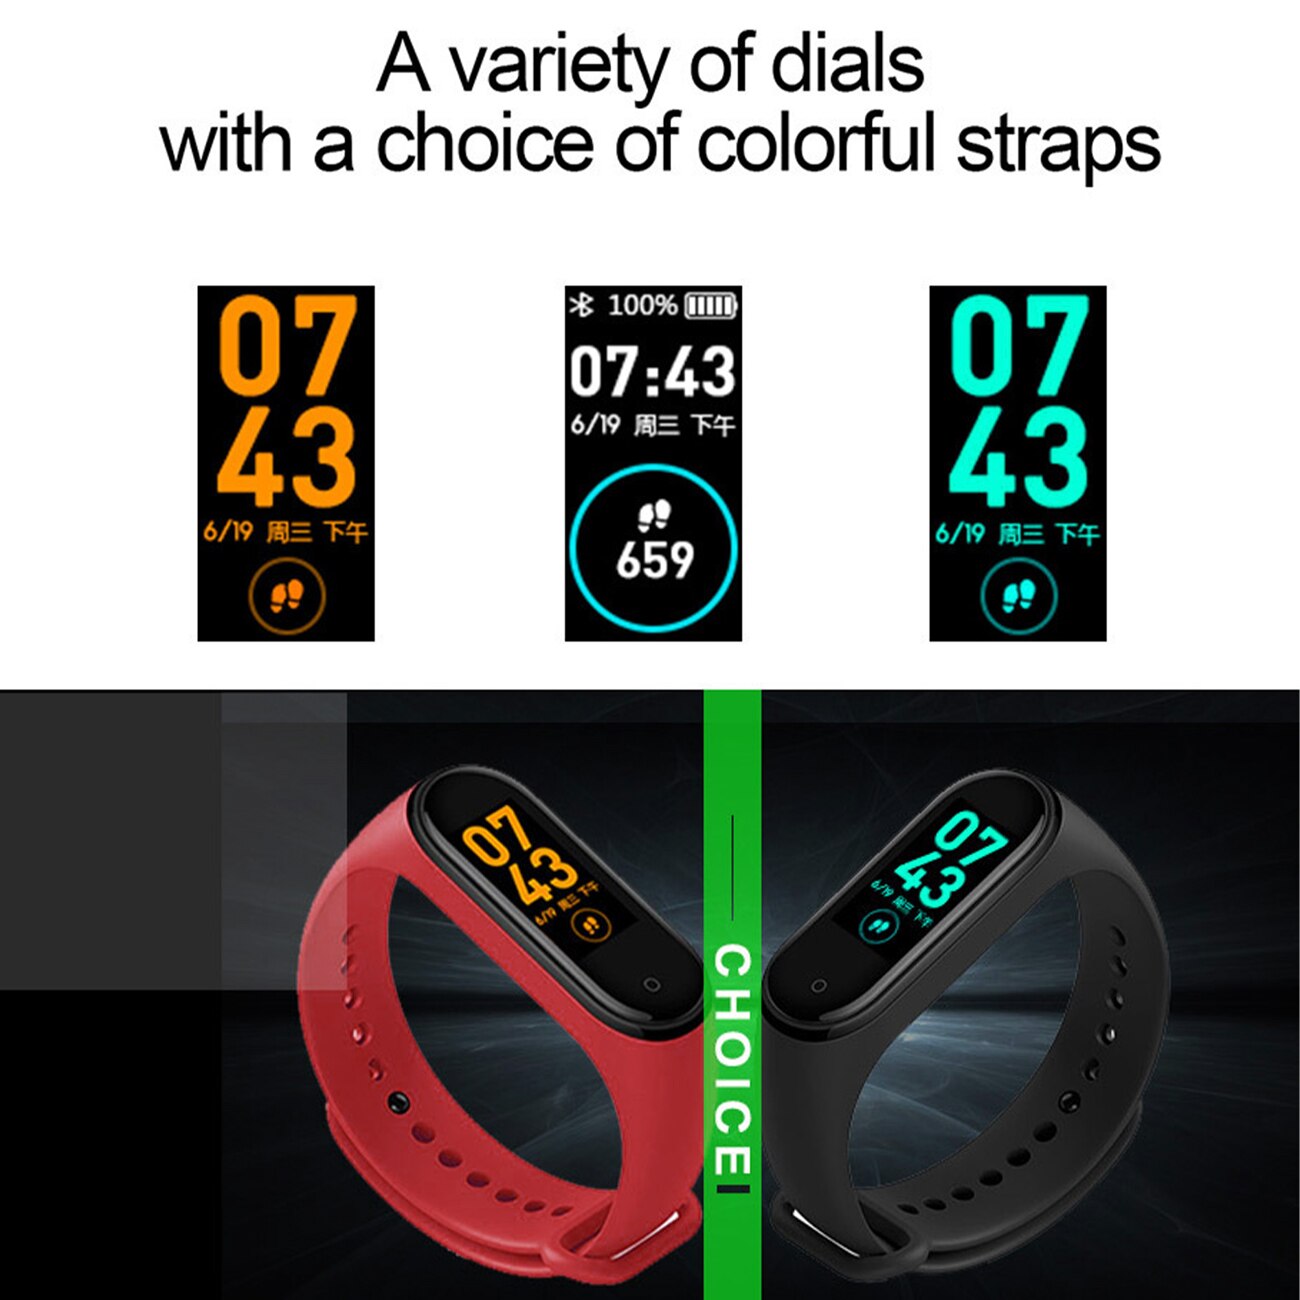 M4 Smart Watch Band Sport Tracker orologi Smart Bracelet Health Watch Fitness Wristband pressione sanguigna cardiofrequenzimetro